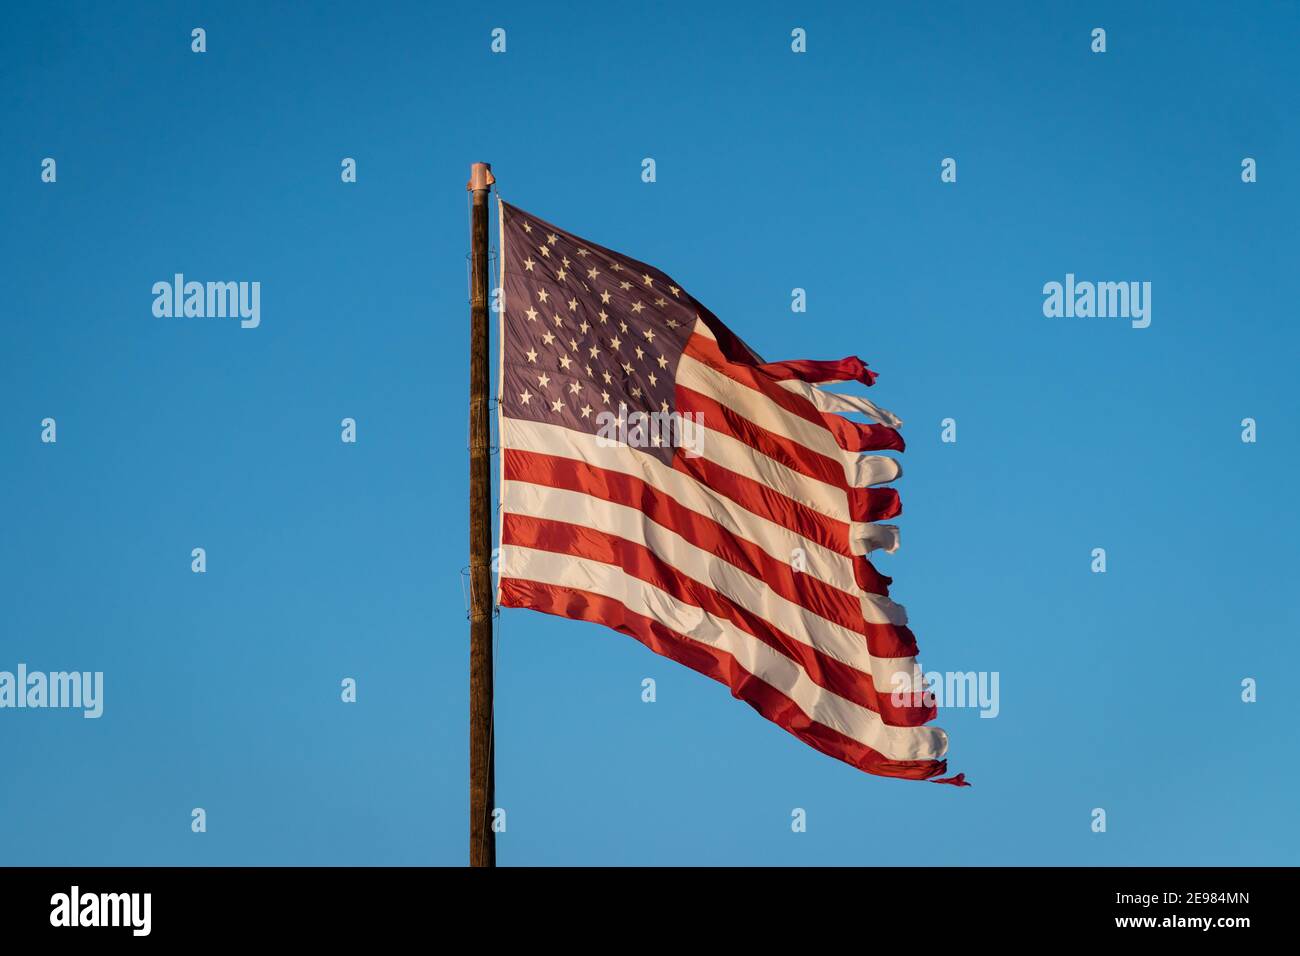 Drapeau américain flatté contre un ciel bleu brillant Banque D'Images